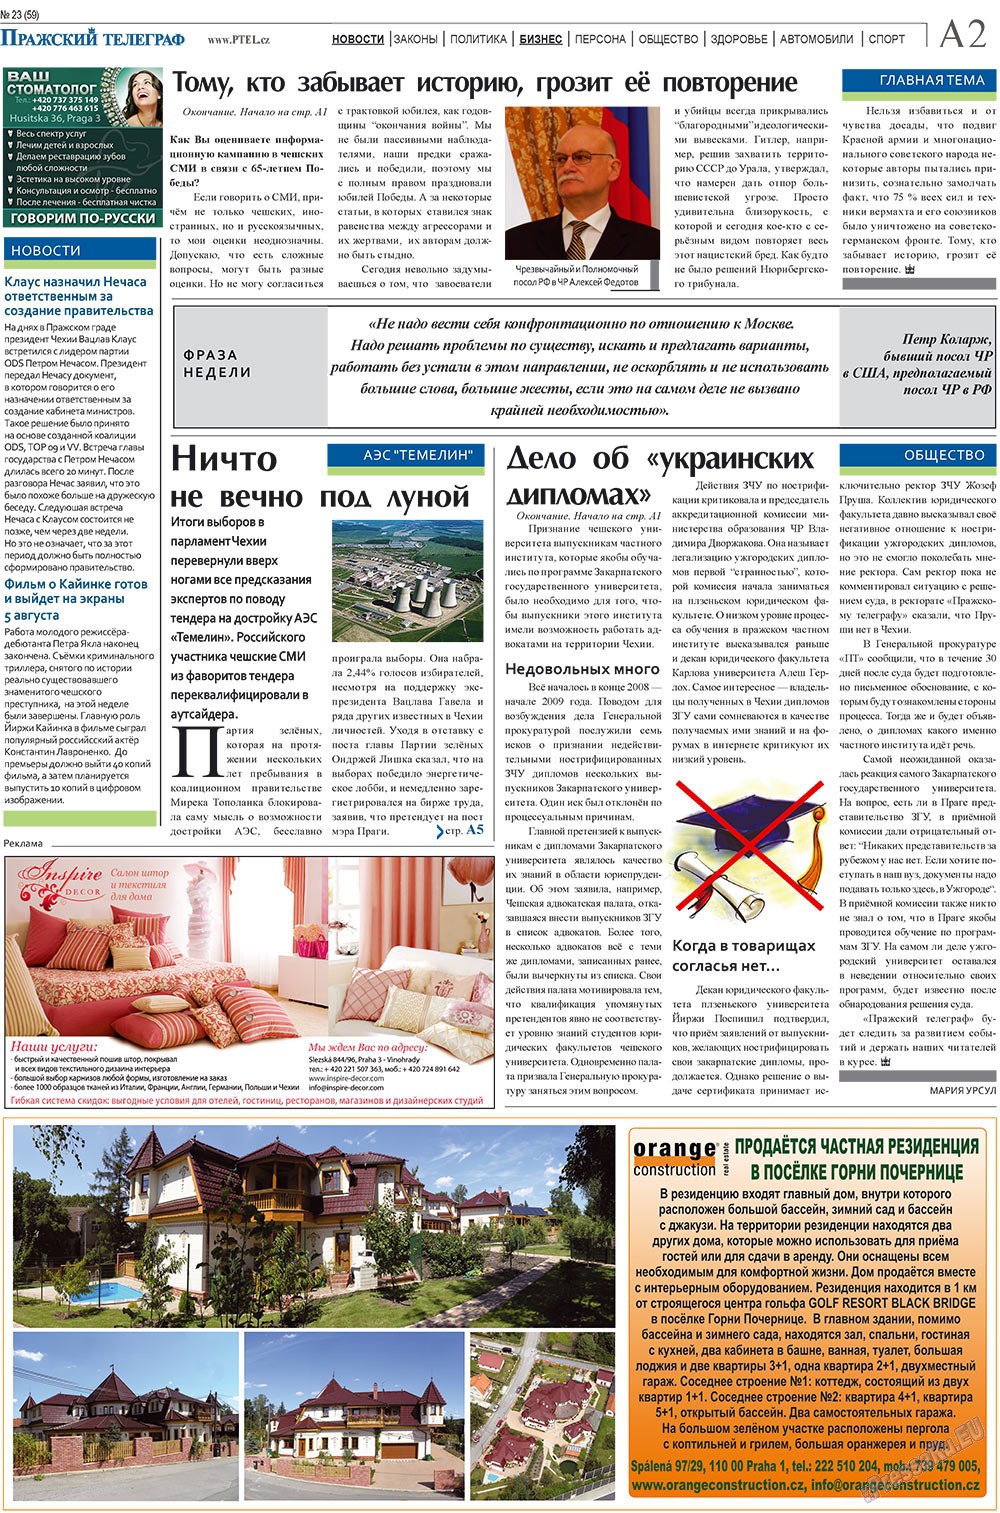 Пражский телеграф, газета. 2010 №23 стр.2